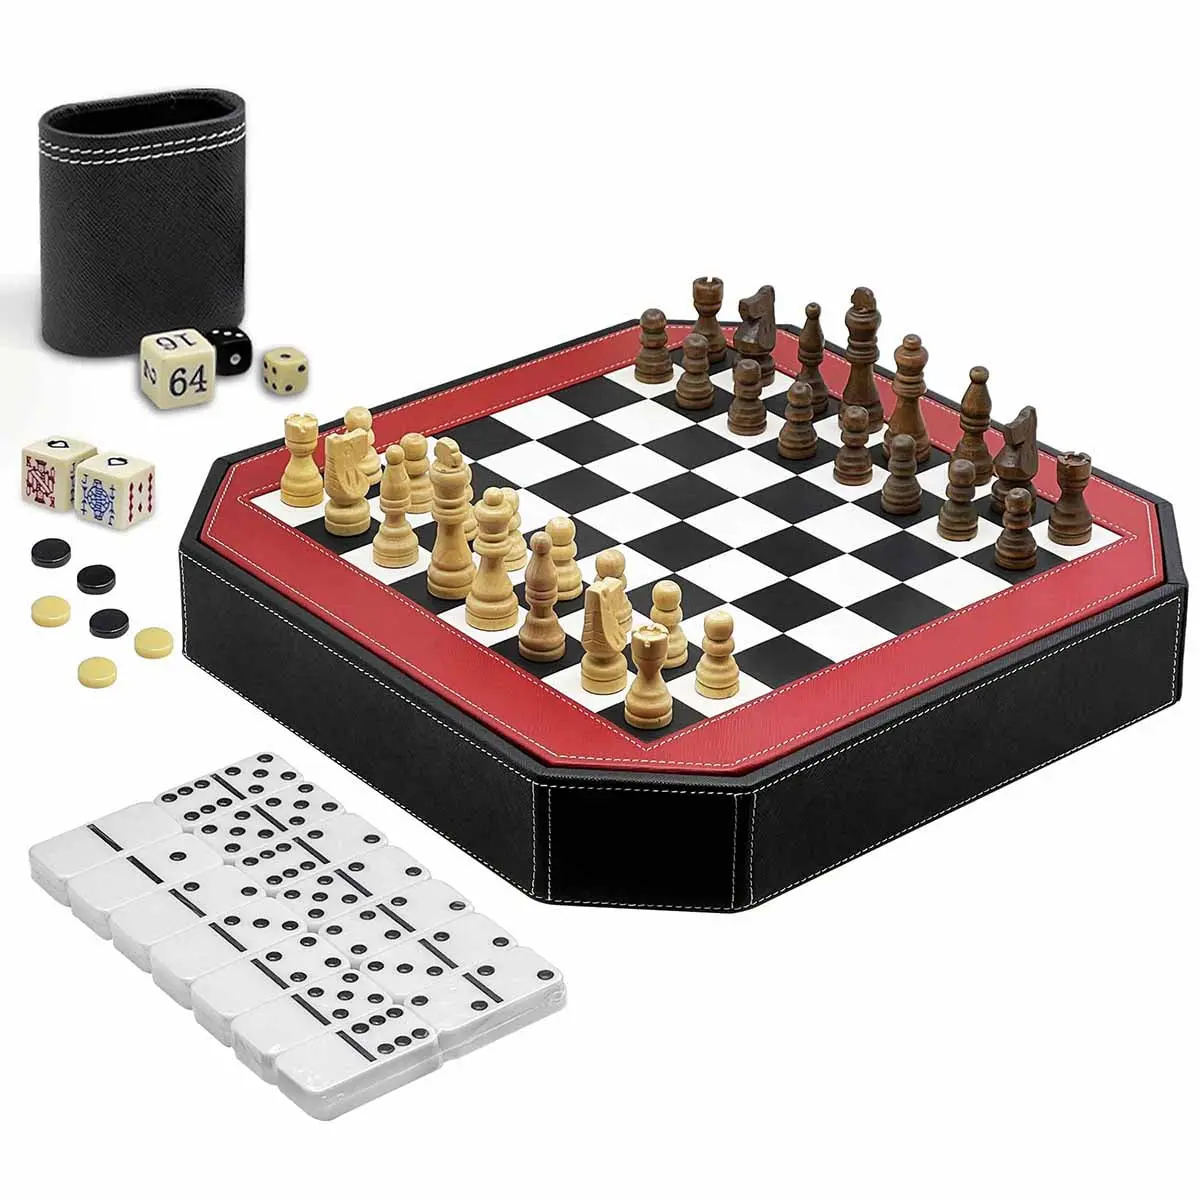 Conjunto de jogos de mesa, amigos jogando dominó e xadrez, um